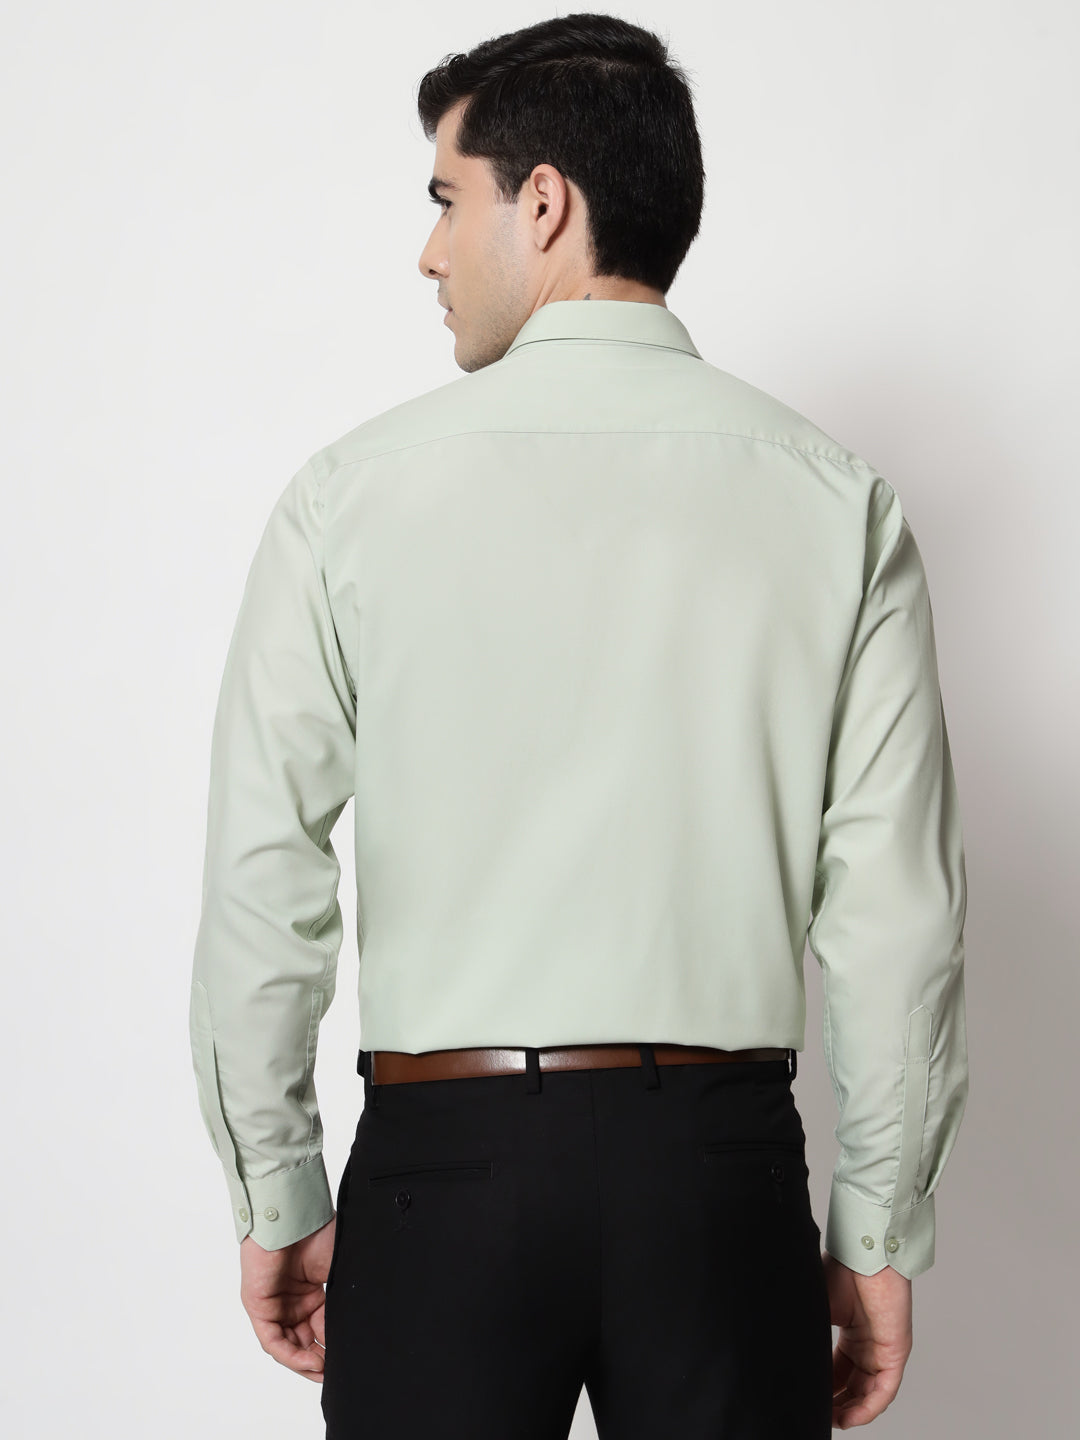 Black and White Shirts Mint Green Plain Solid Shirt